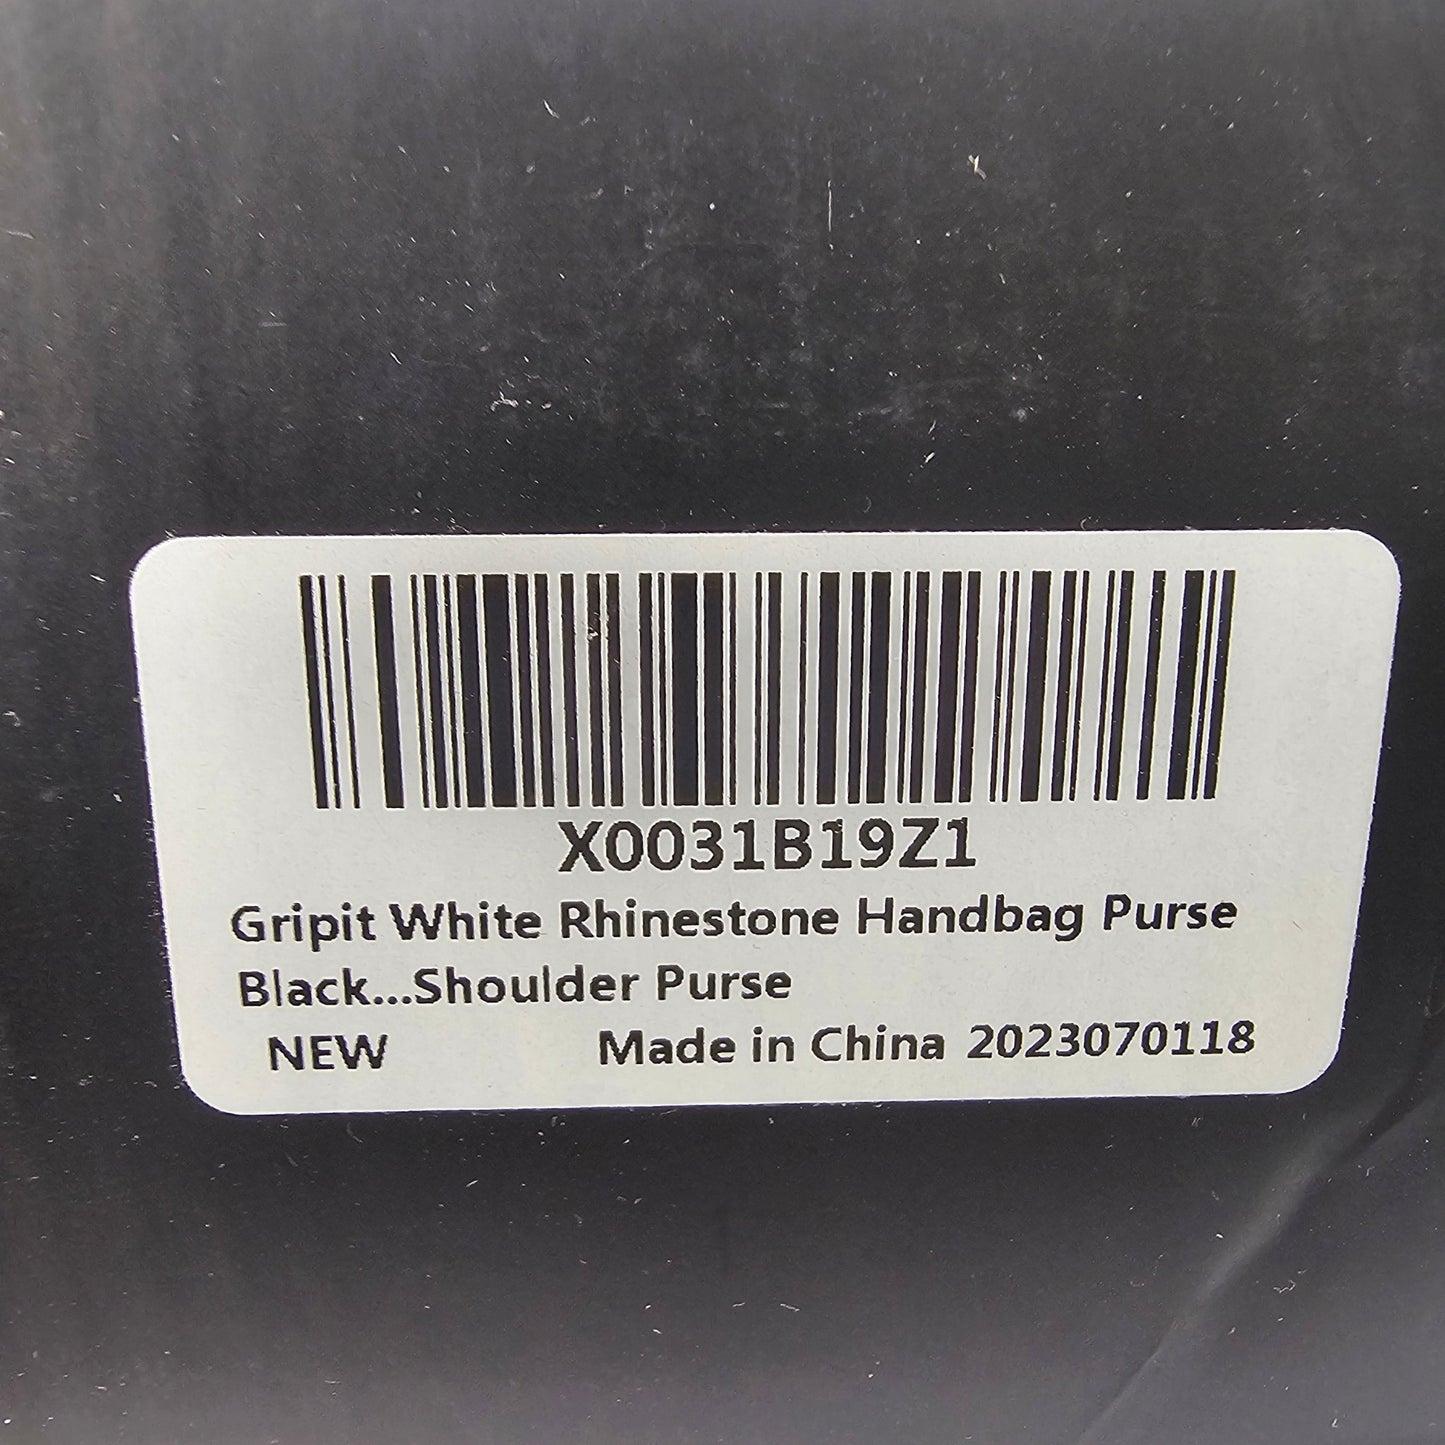 White Rhinestone Handbag Purse Gripit - DQ Distribution